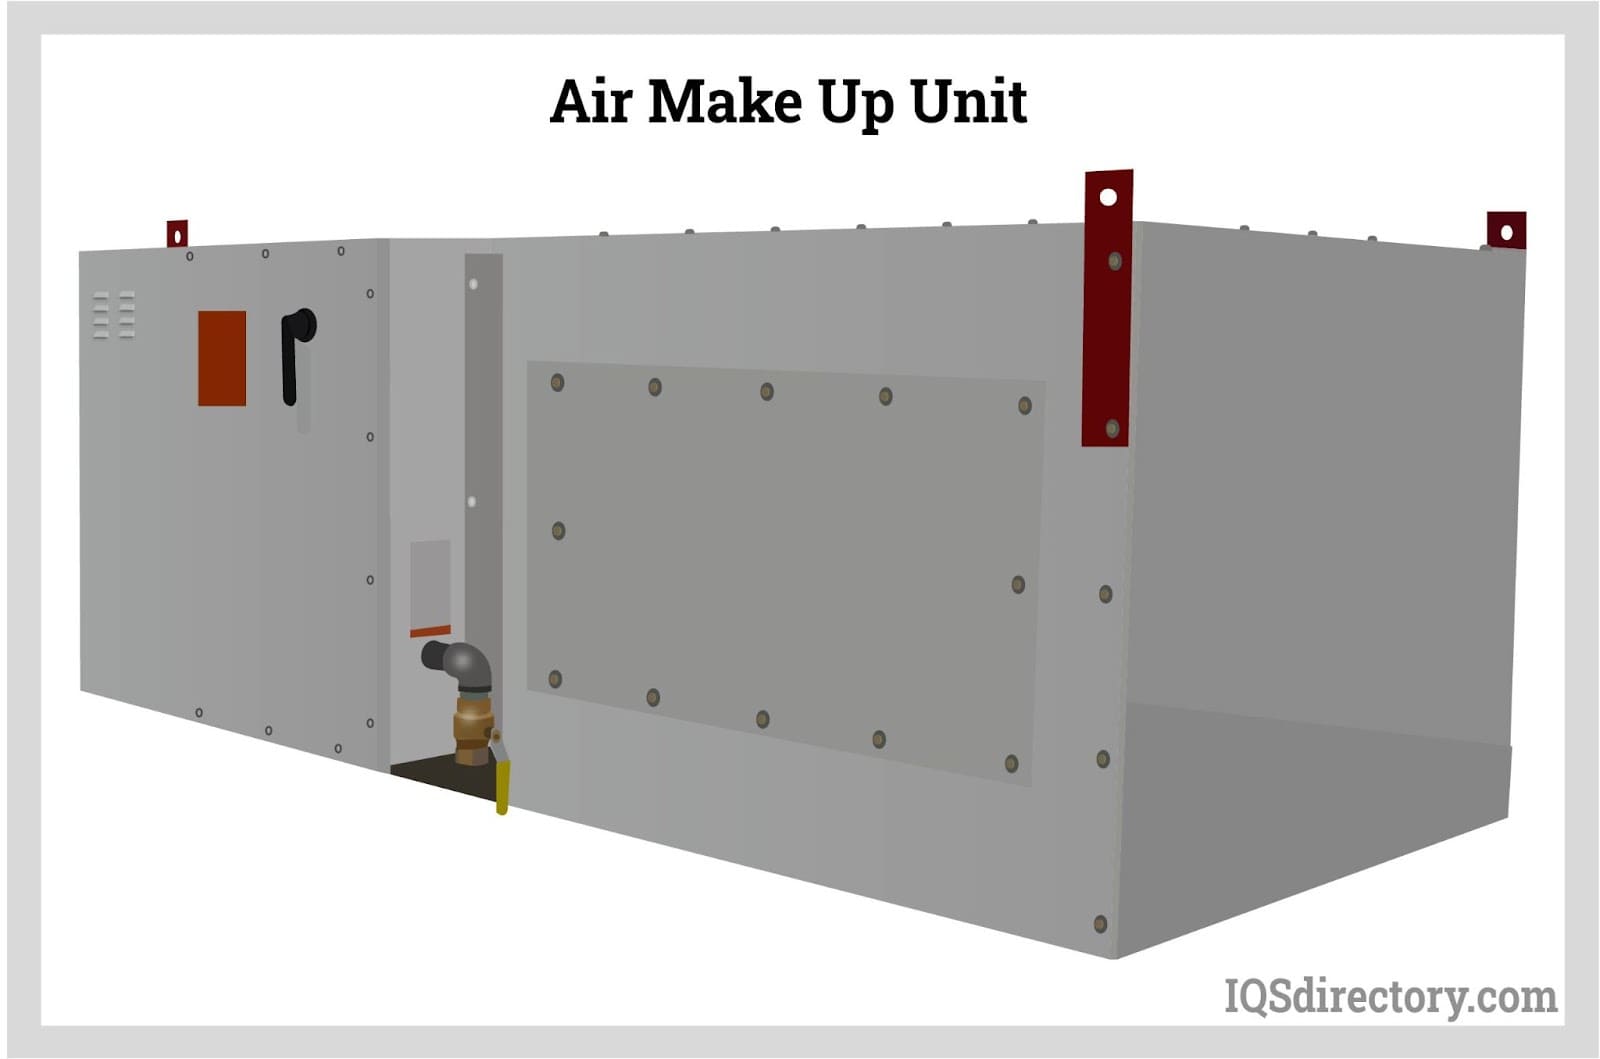 Air Make Up Unit